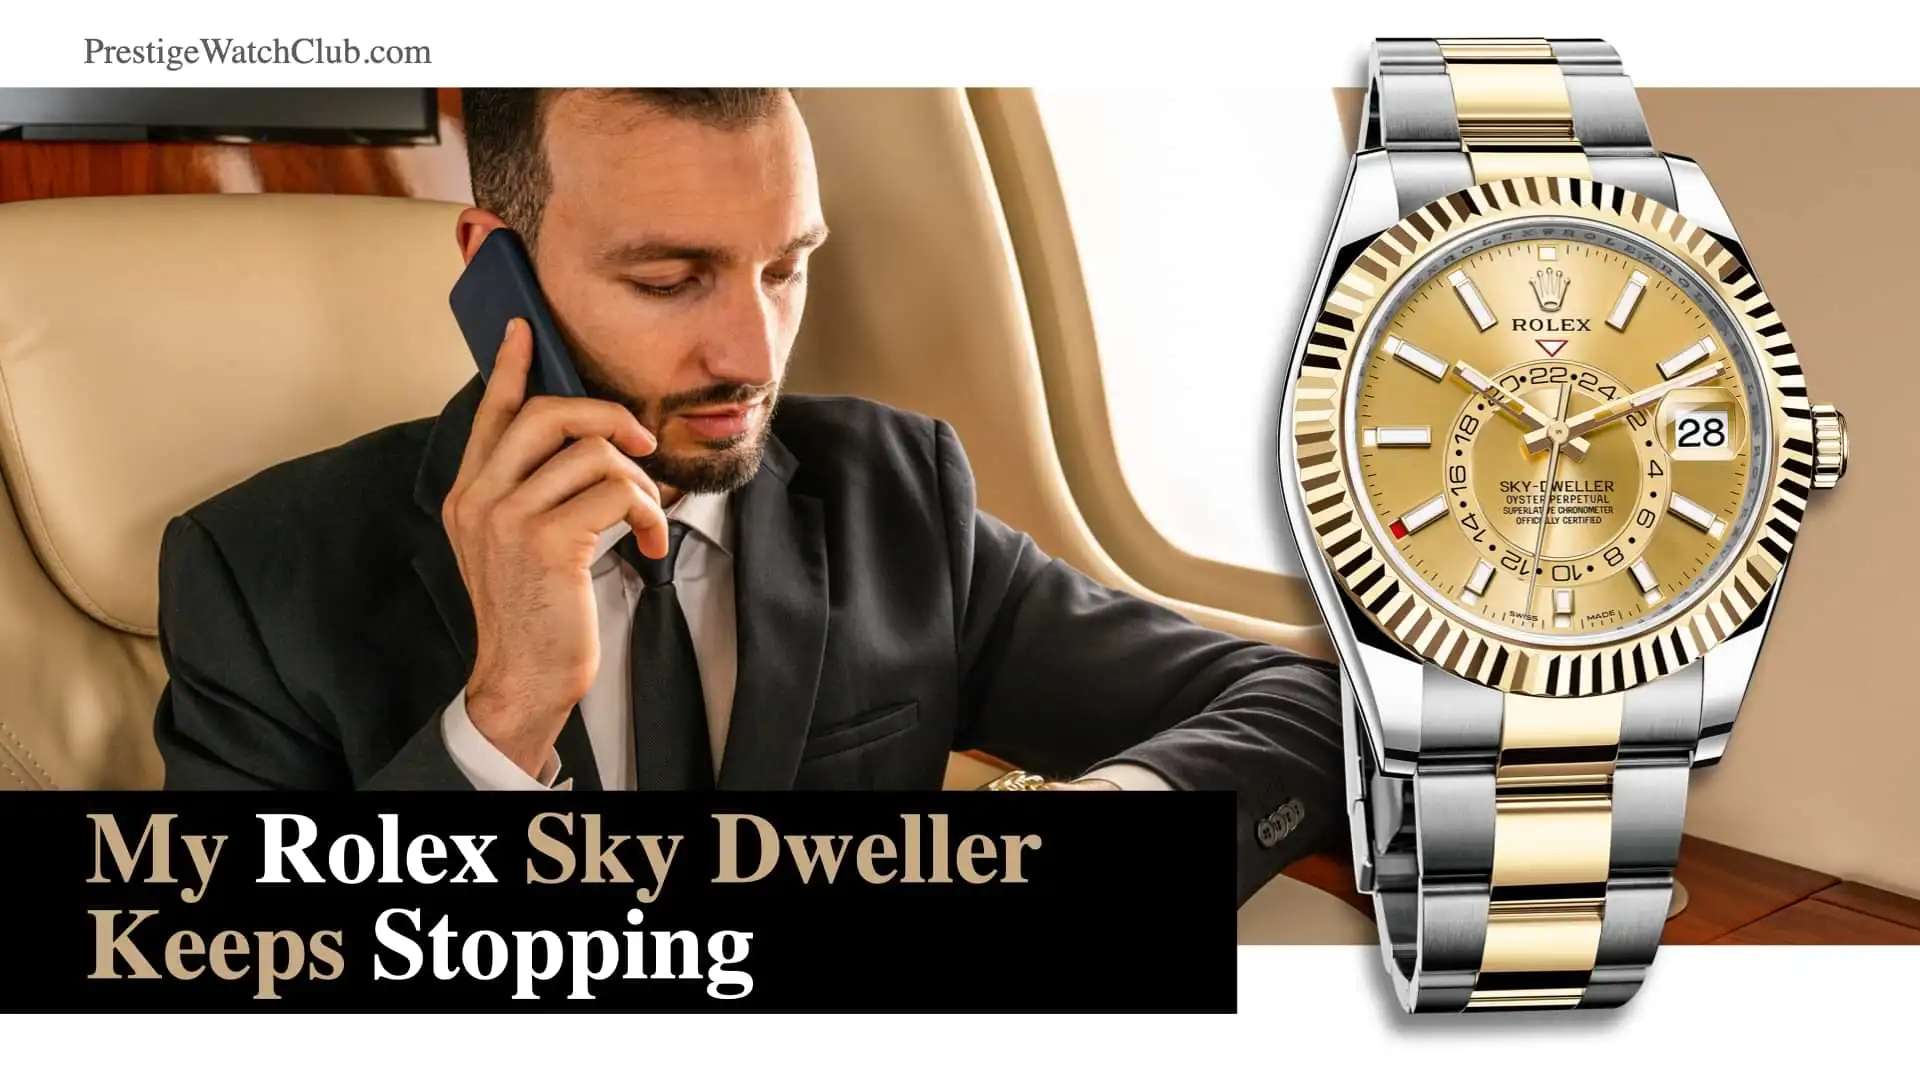 My Rolex Sky Dweller Watch Keeps Stopping